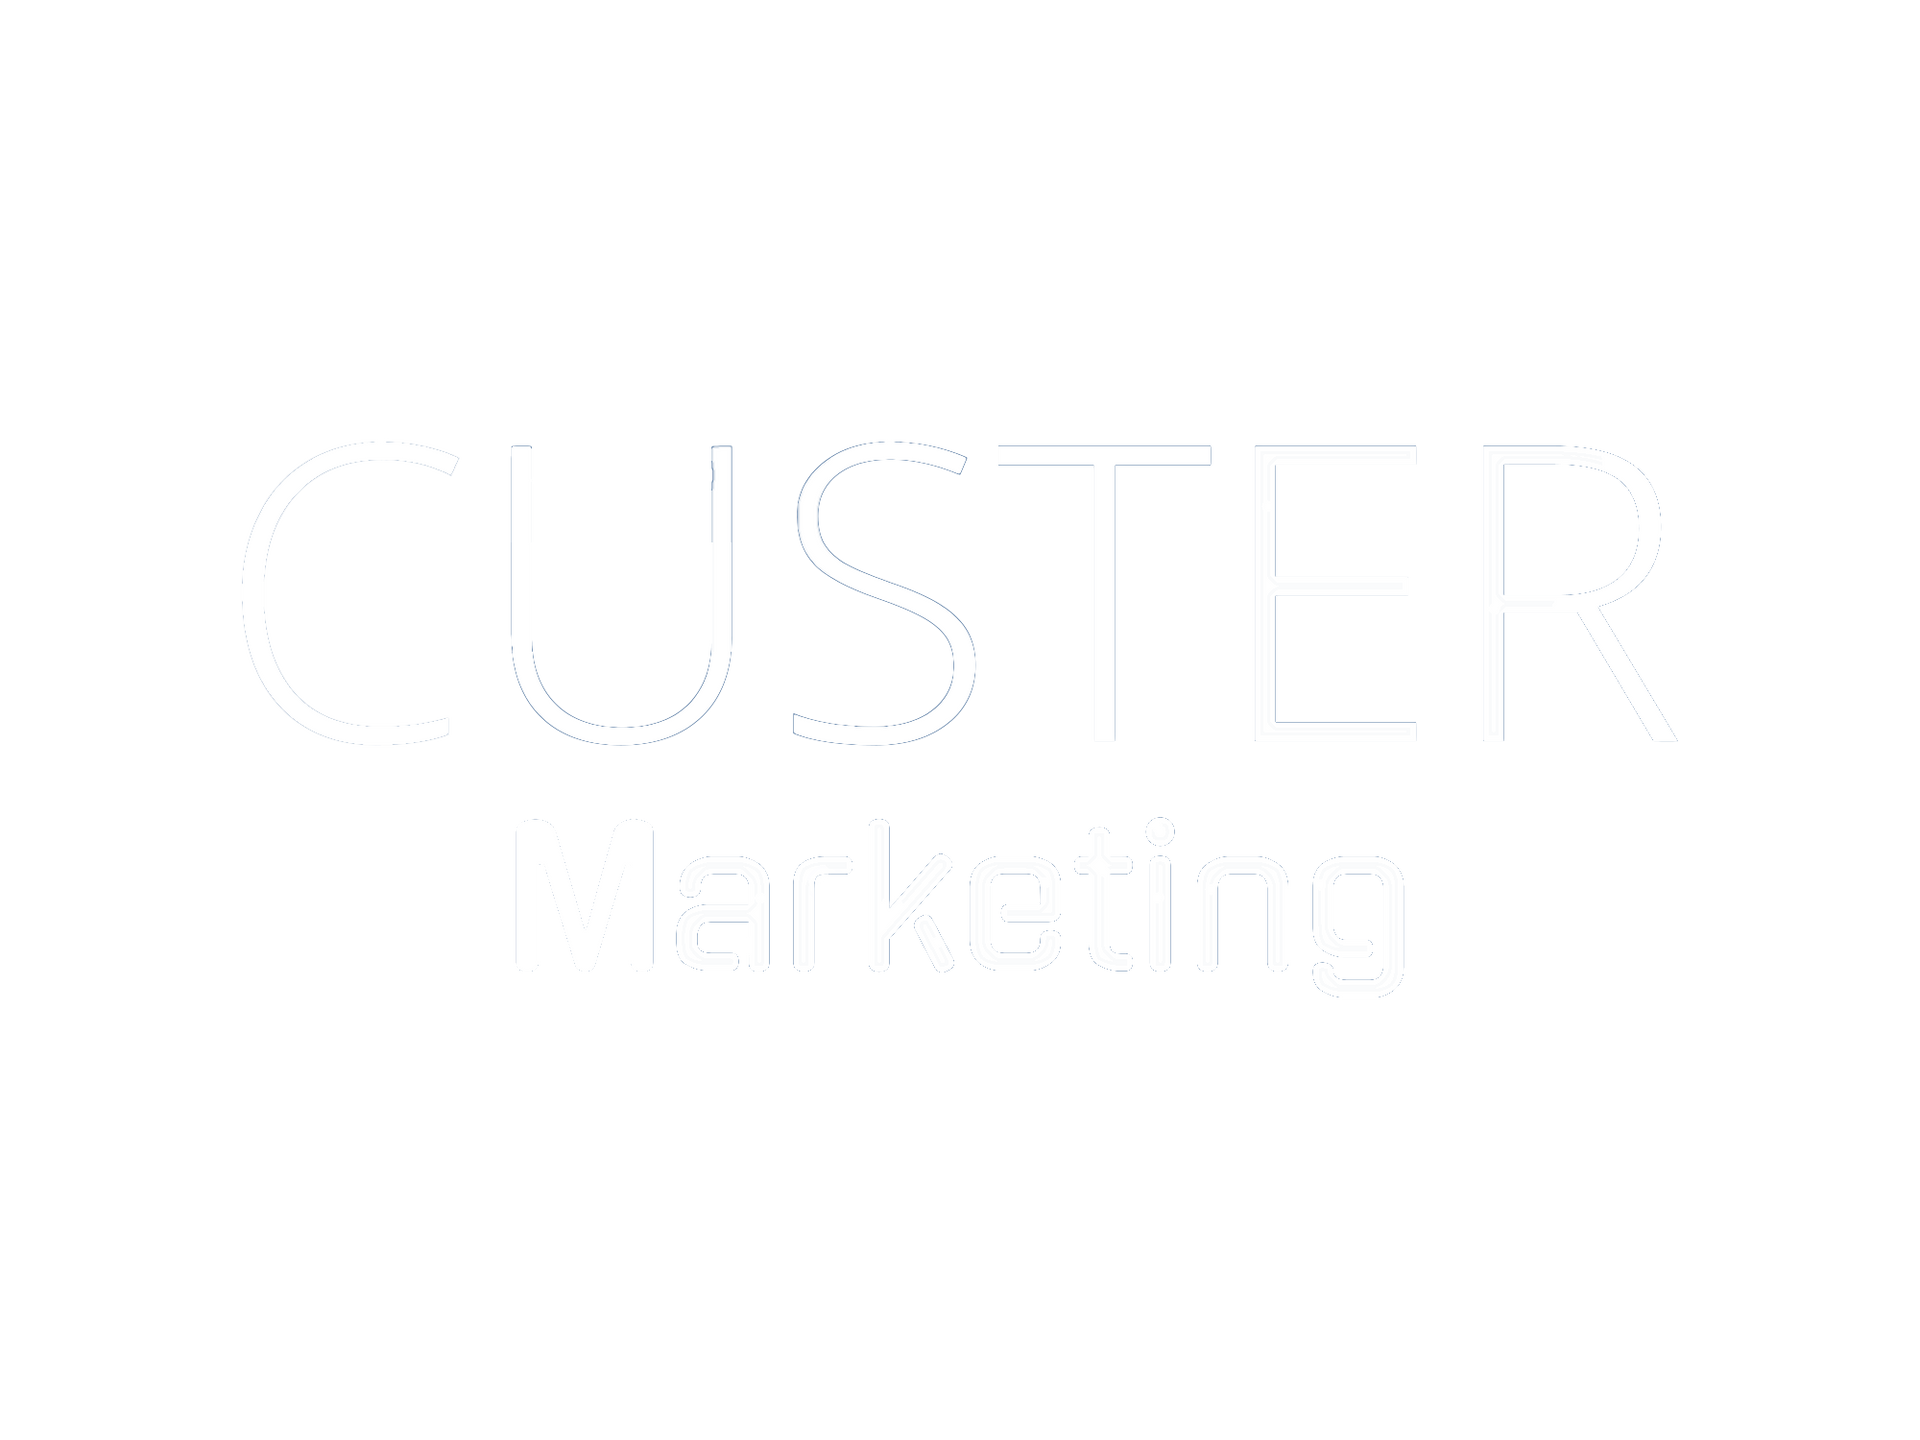 Custer marketing